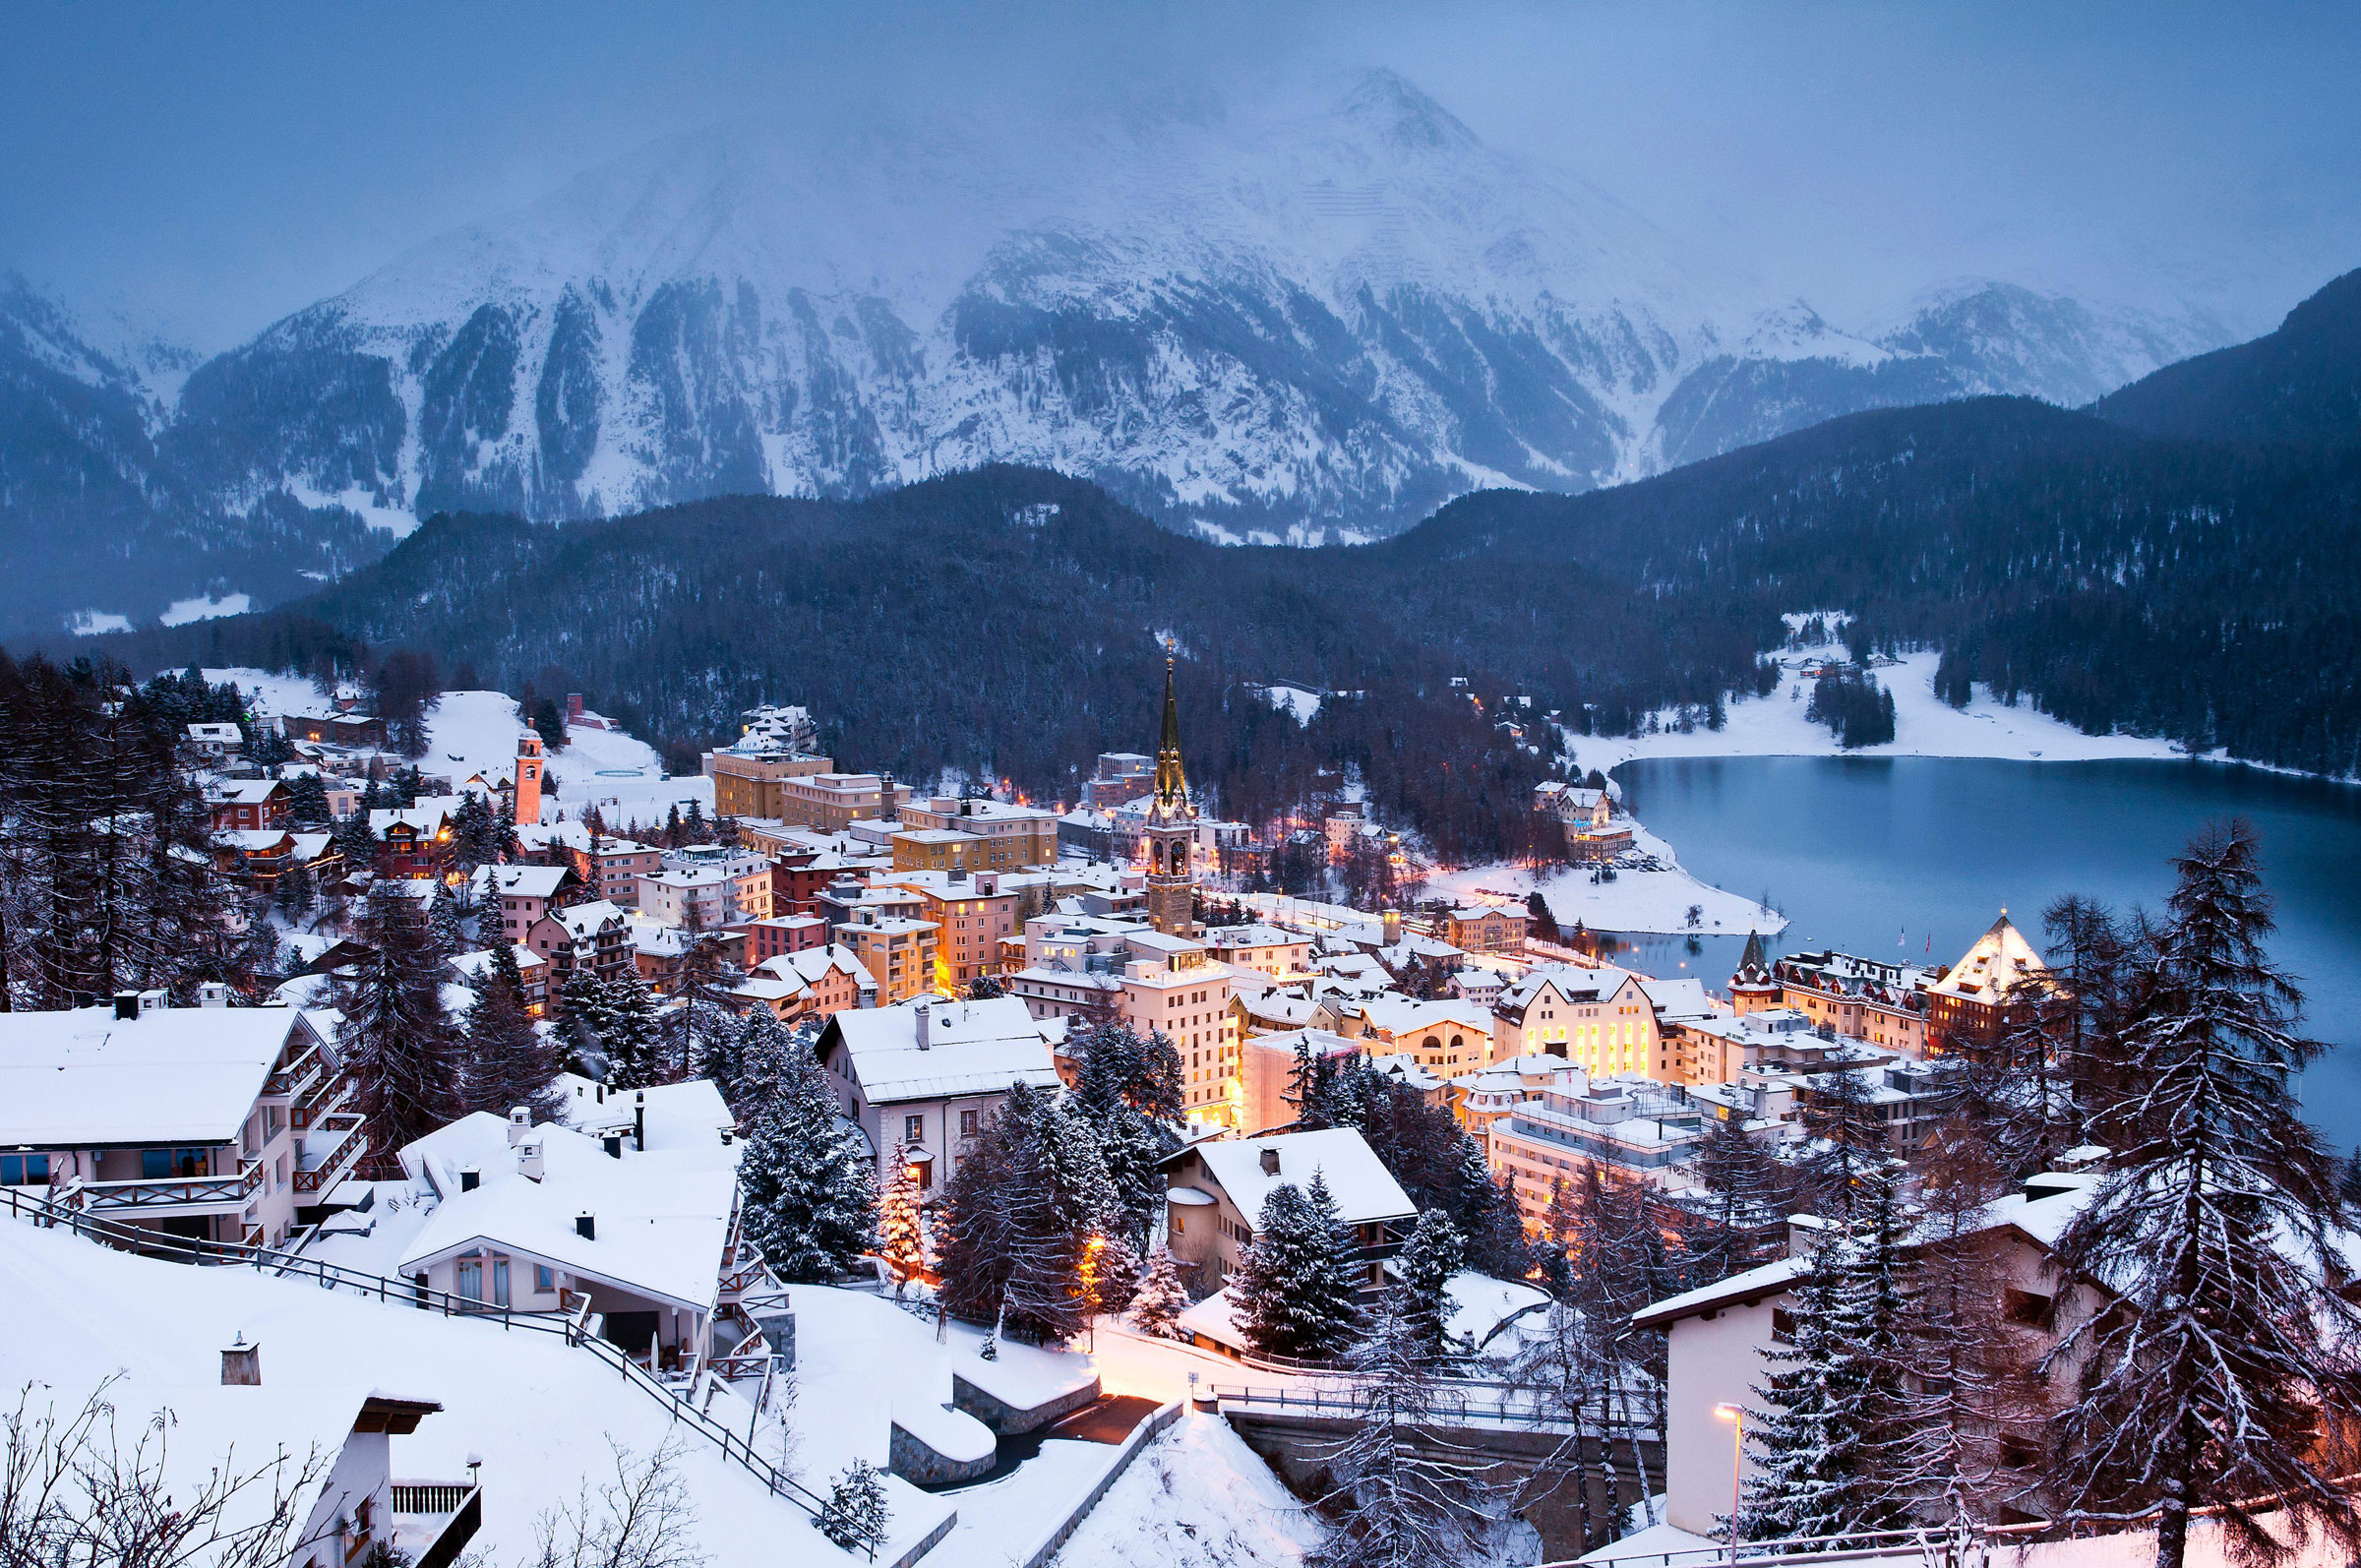 Winter view of St. Moritz, Switzerland.